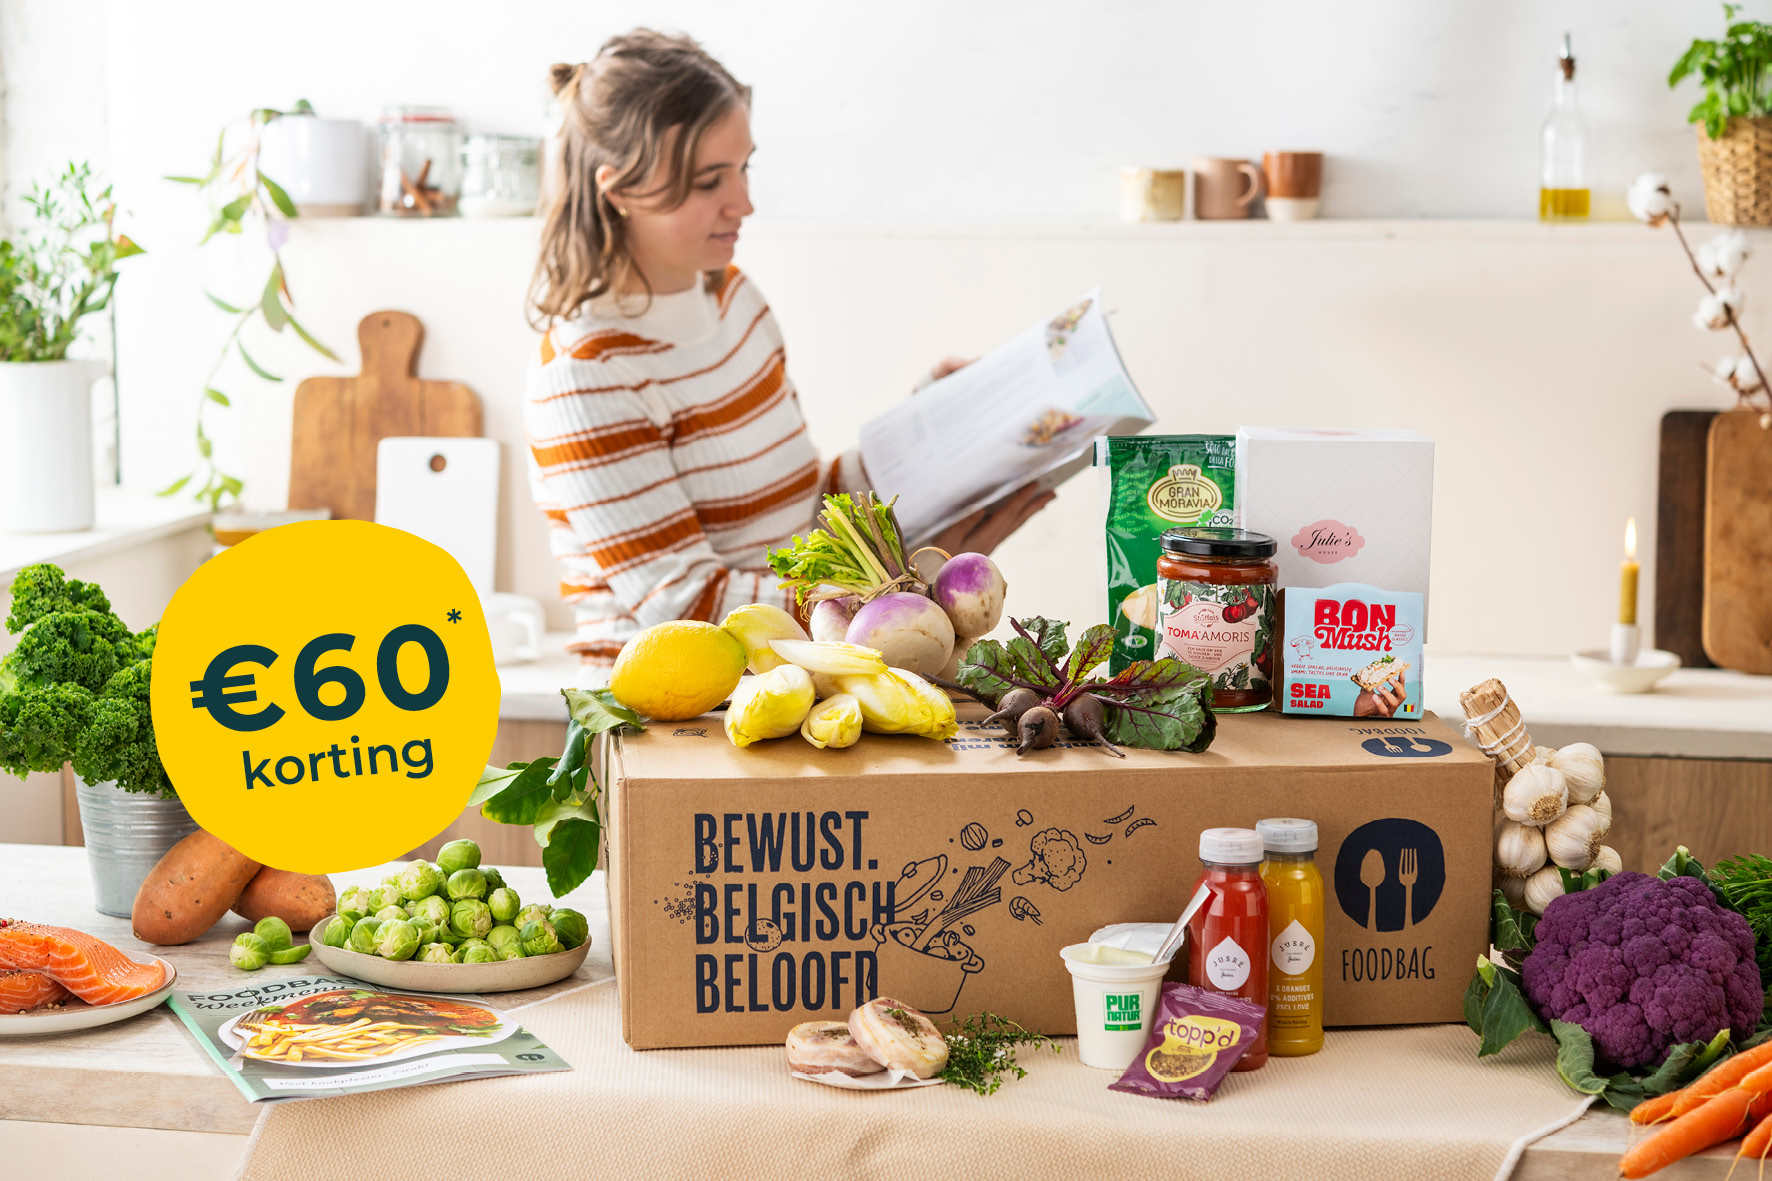 Online Shopping Deals Foodbag €60 korting